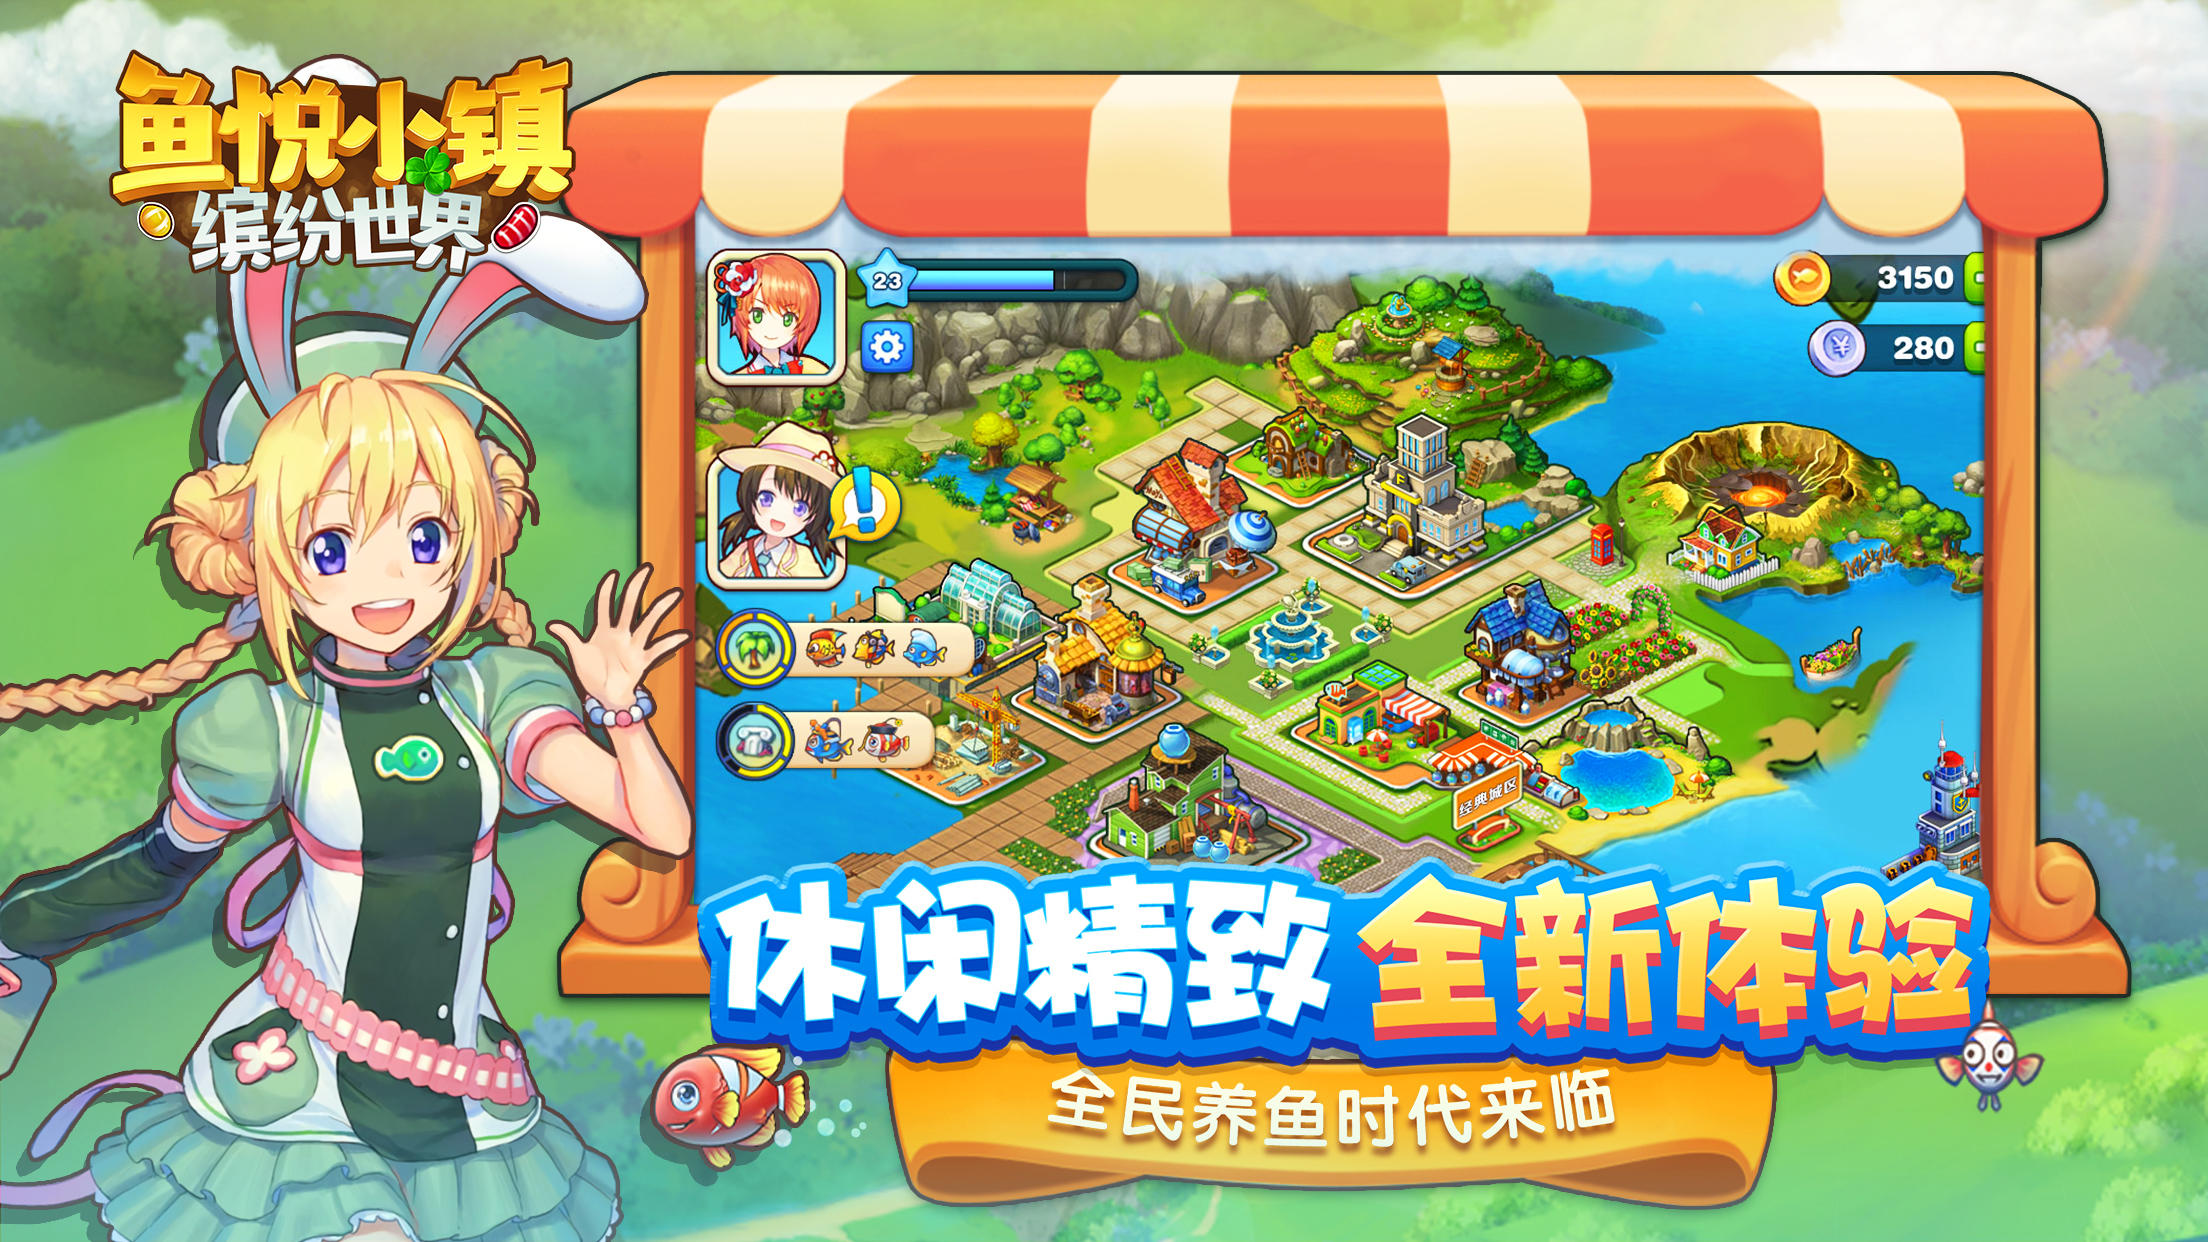 Screenshot 1 of Yuyue Town (테스트 서버) 1.0